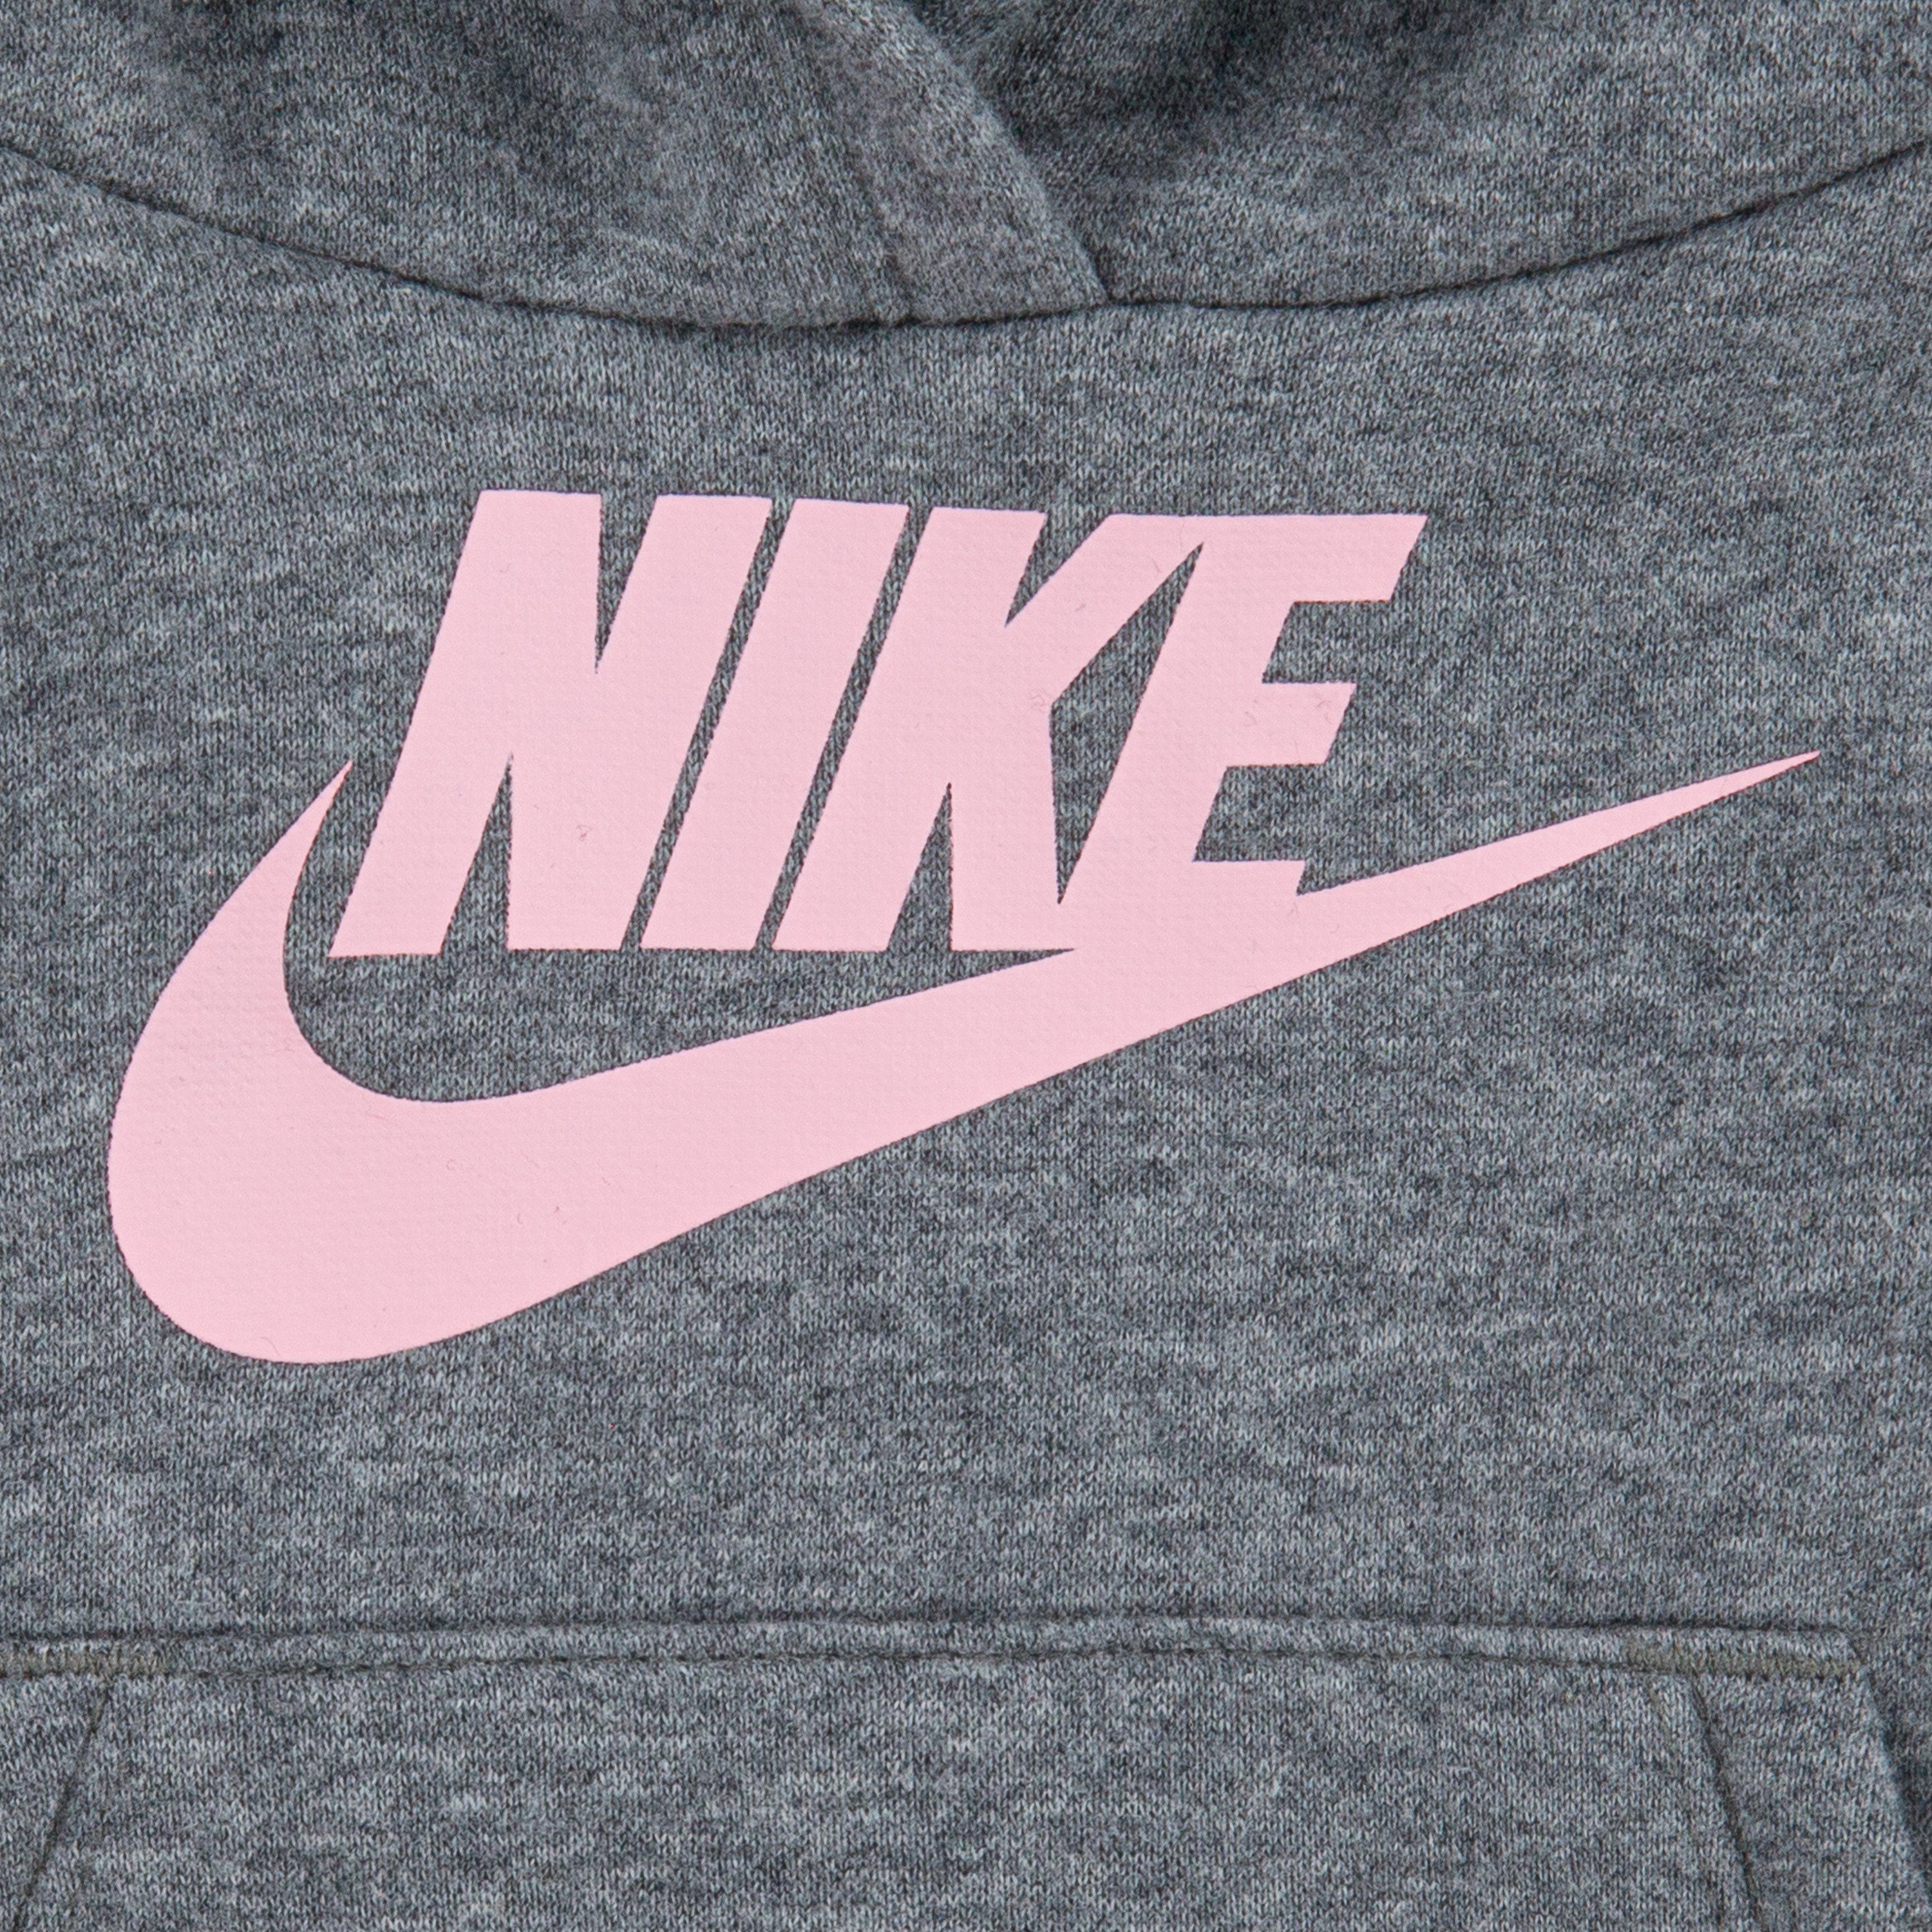 Nike Sportswear Jogginganzug grau-meliert CLUB SET FLEECE